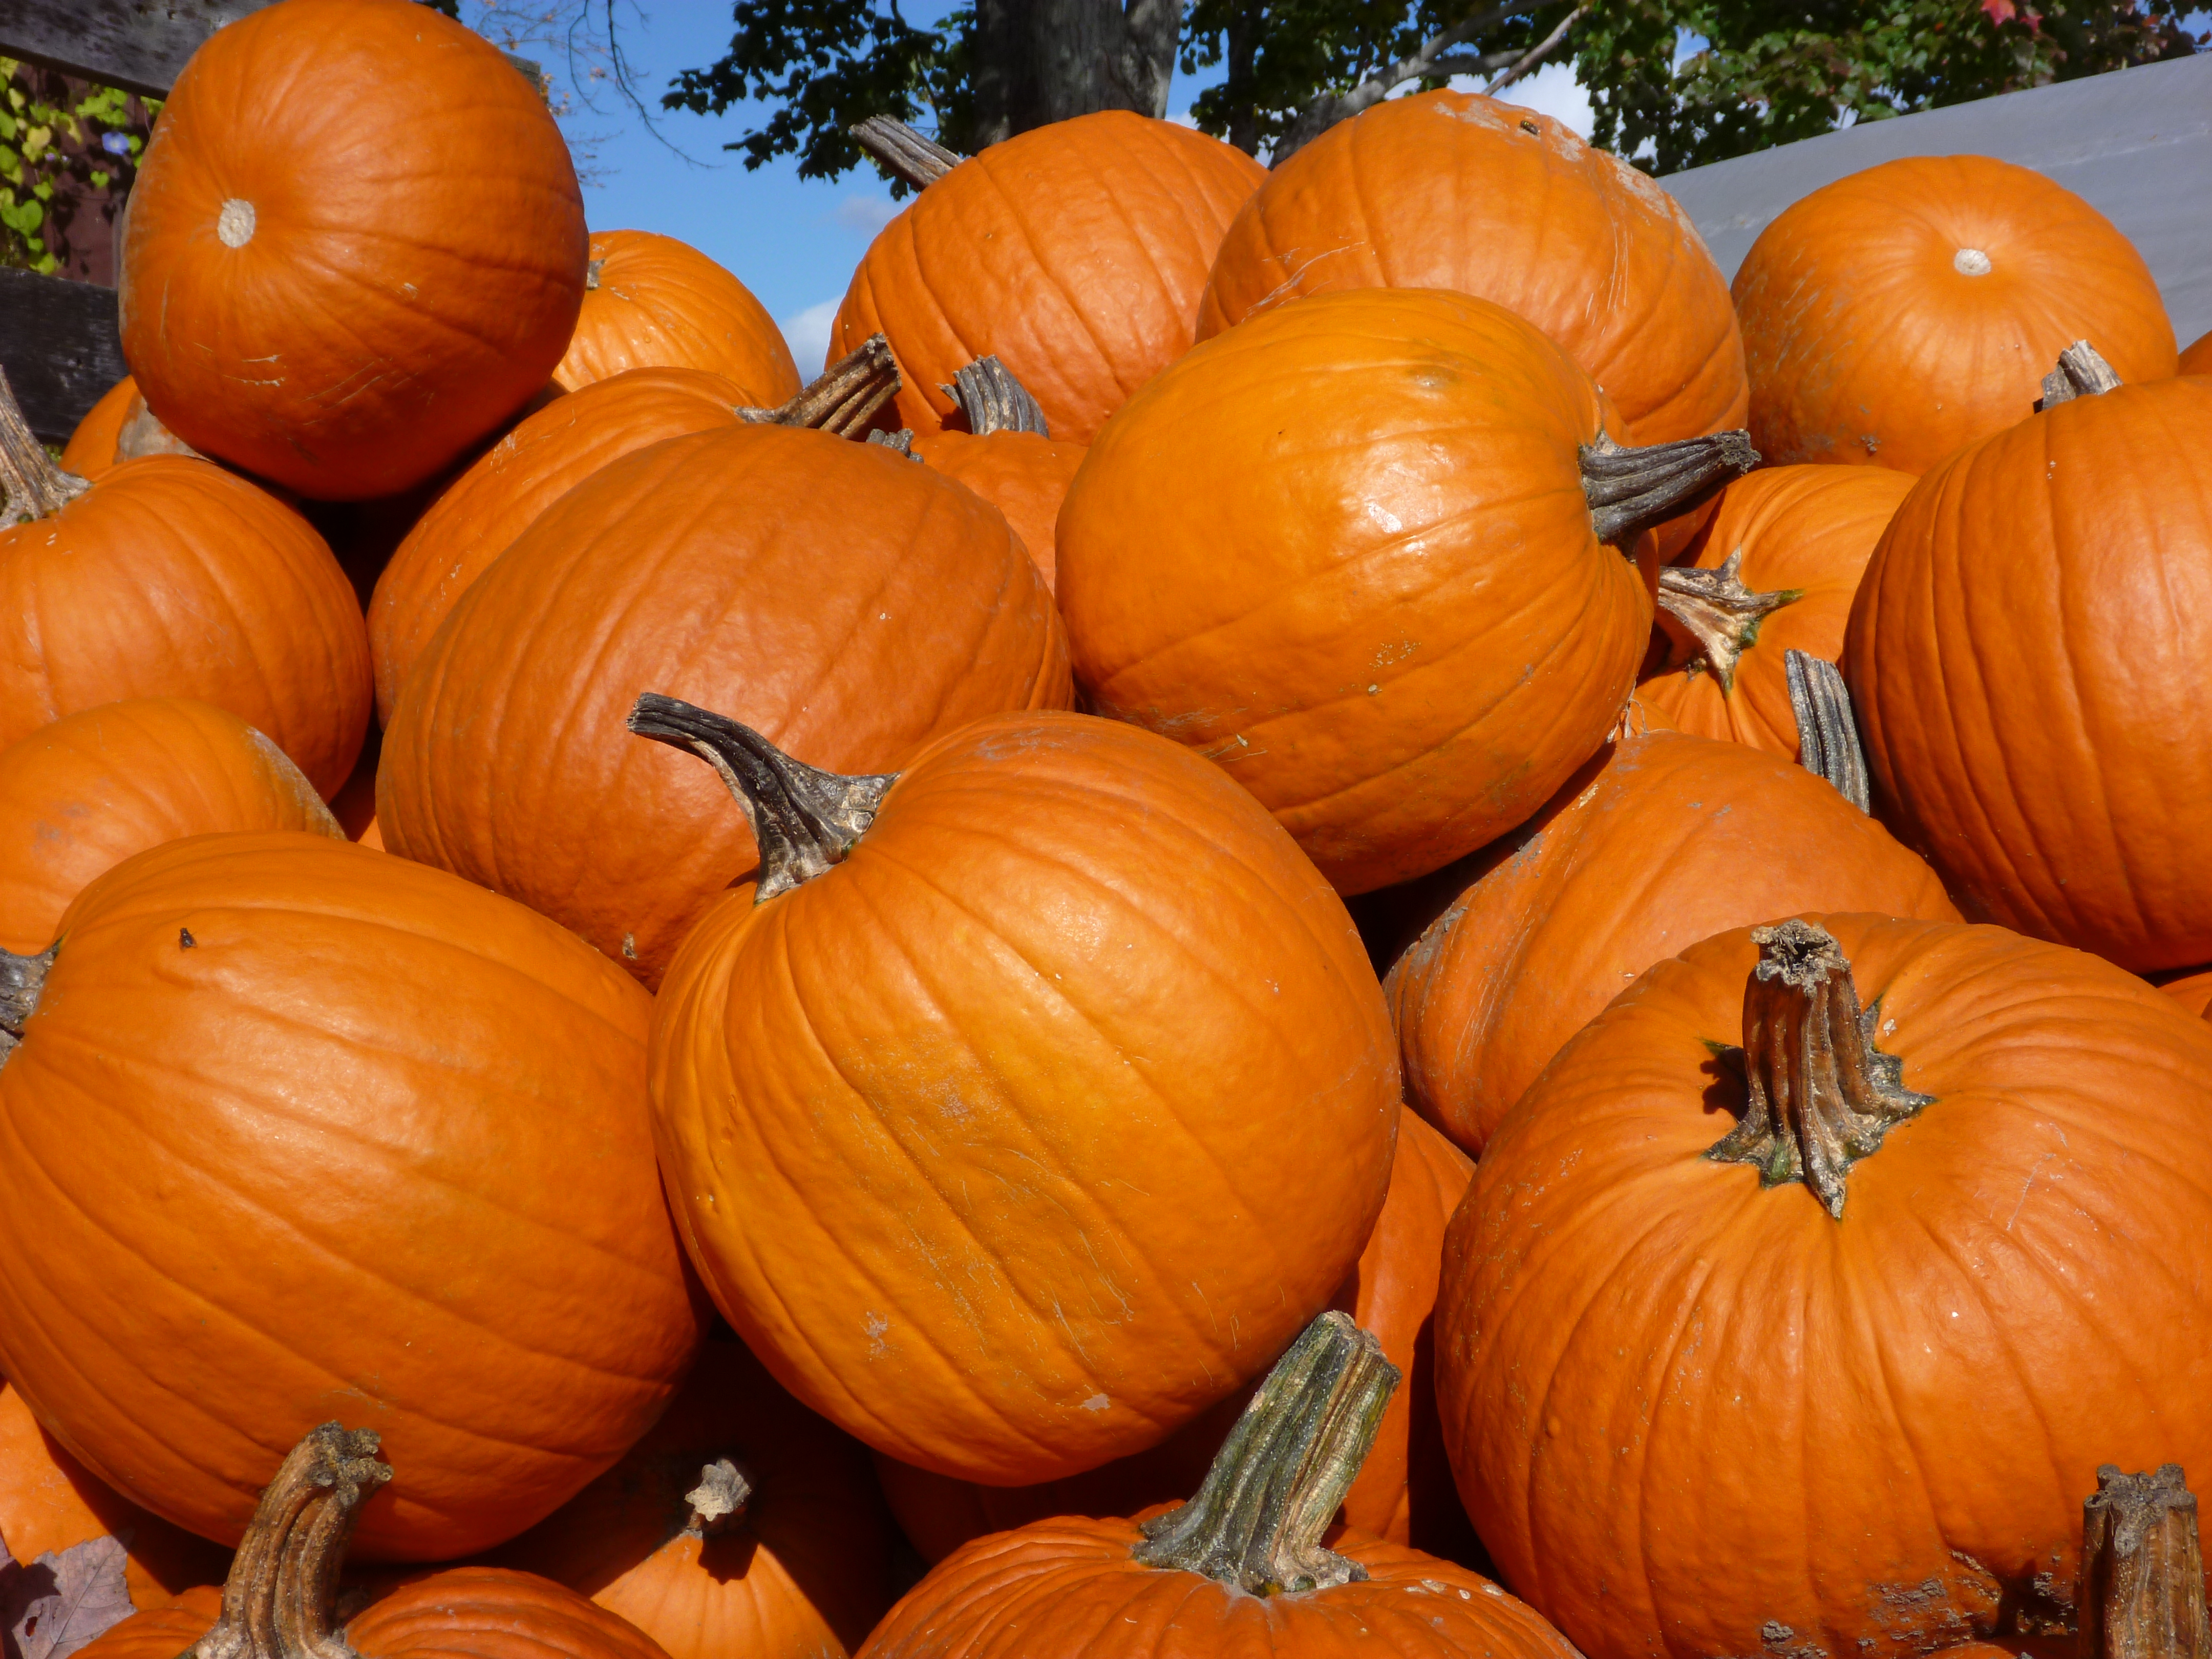 File:Pumpkin pile 01.jpg - Wikimedia Commons